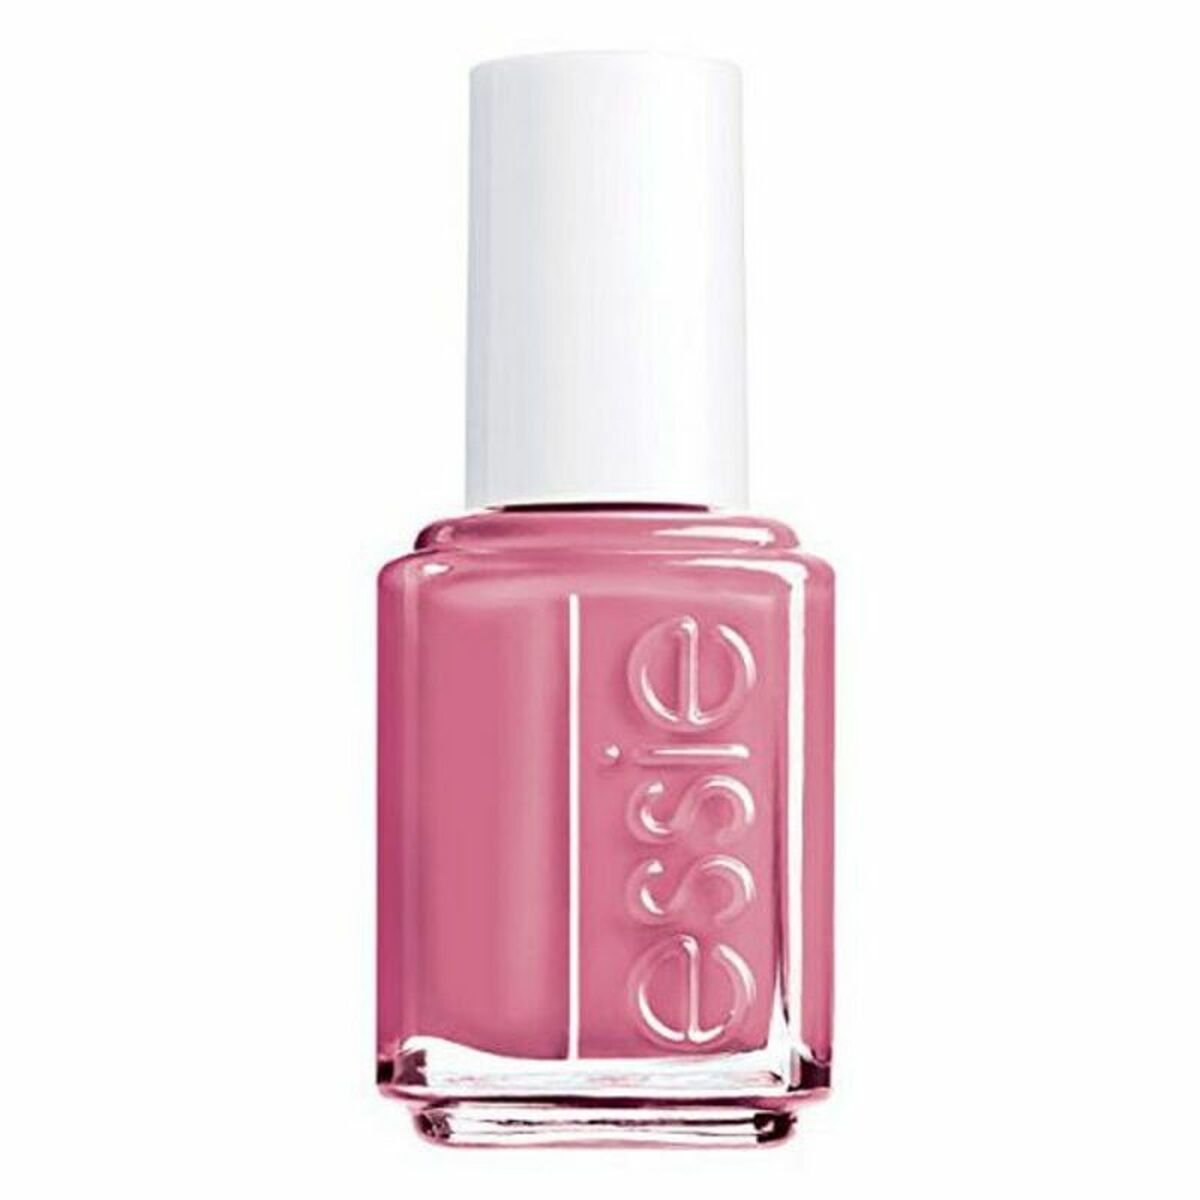 nail polish Color Essie (13,5 ml) - JOSEPH BEAUTY